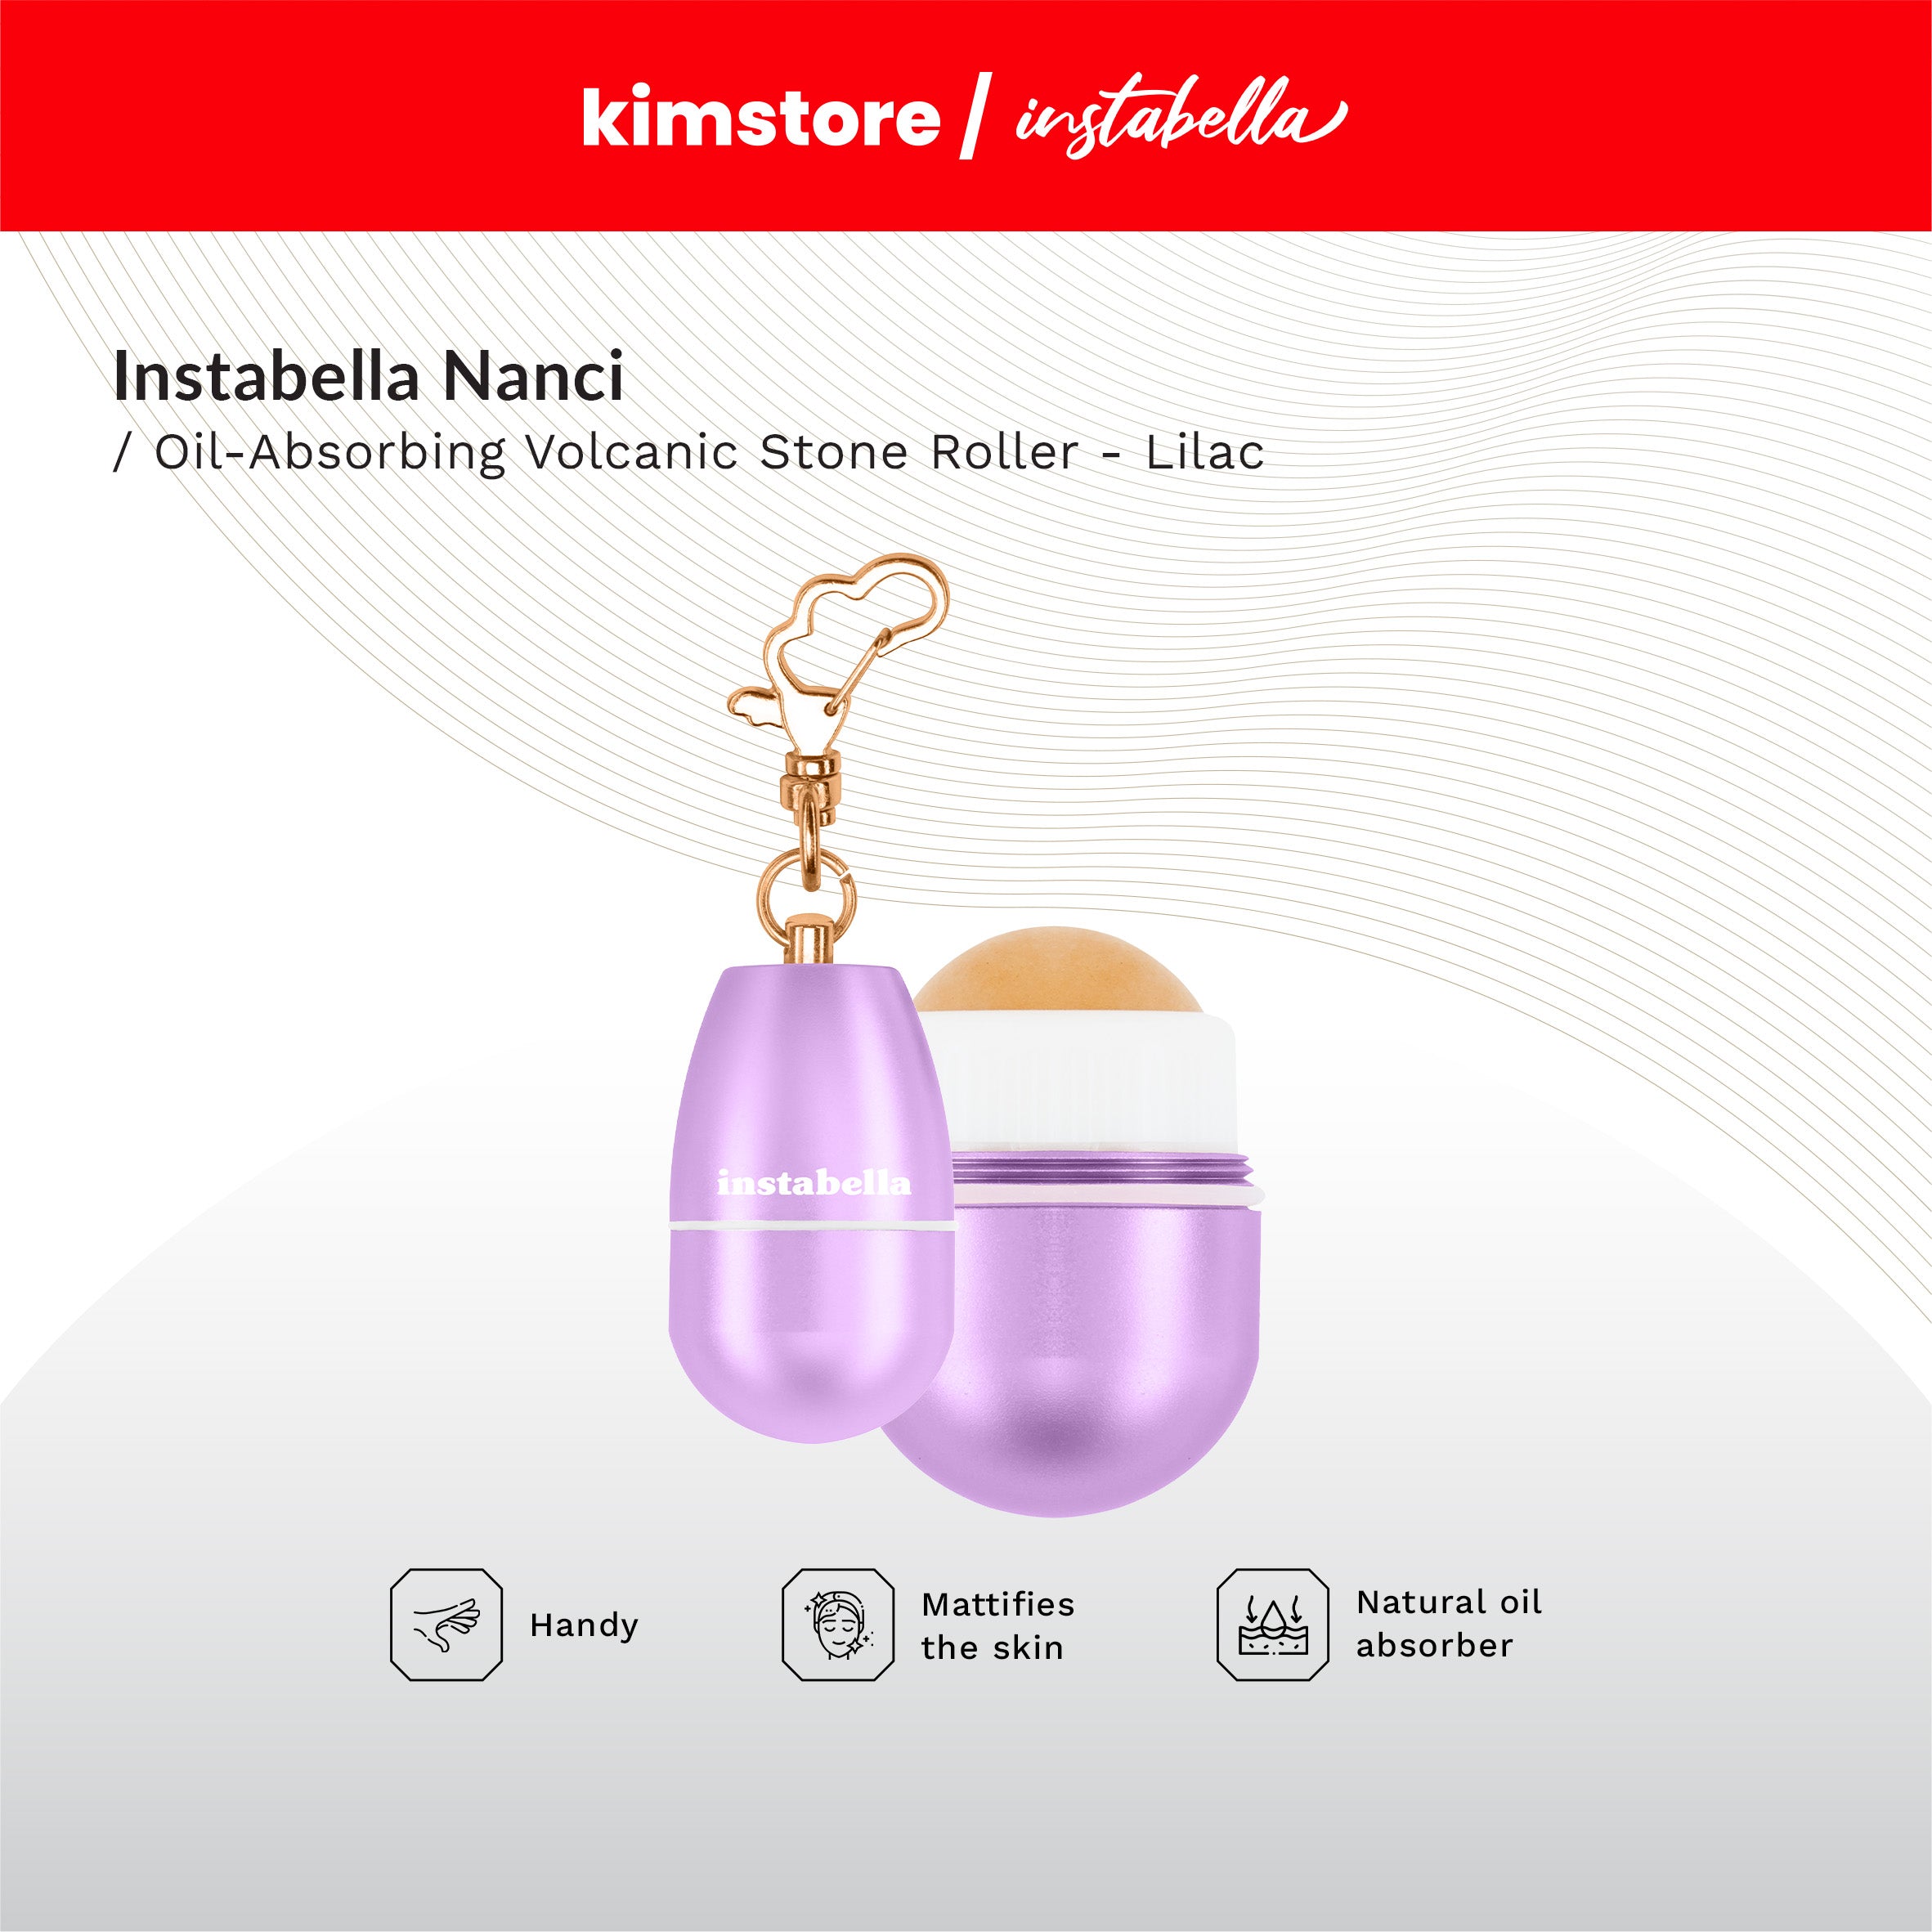 Instabella Nanci Oil-Absorbing Volcanic Stone Roller